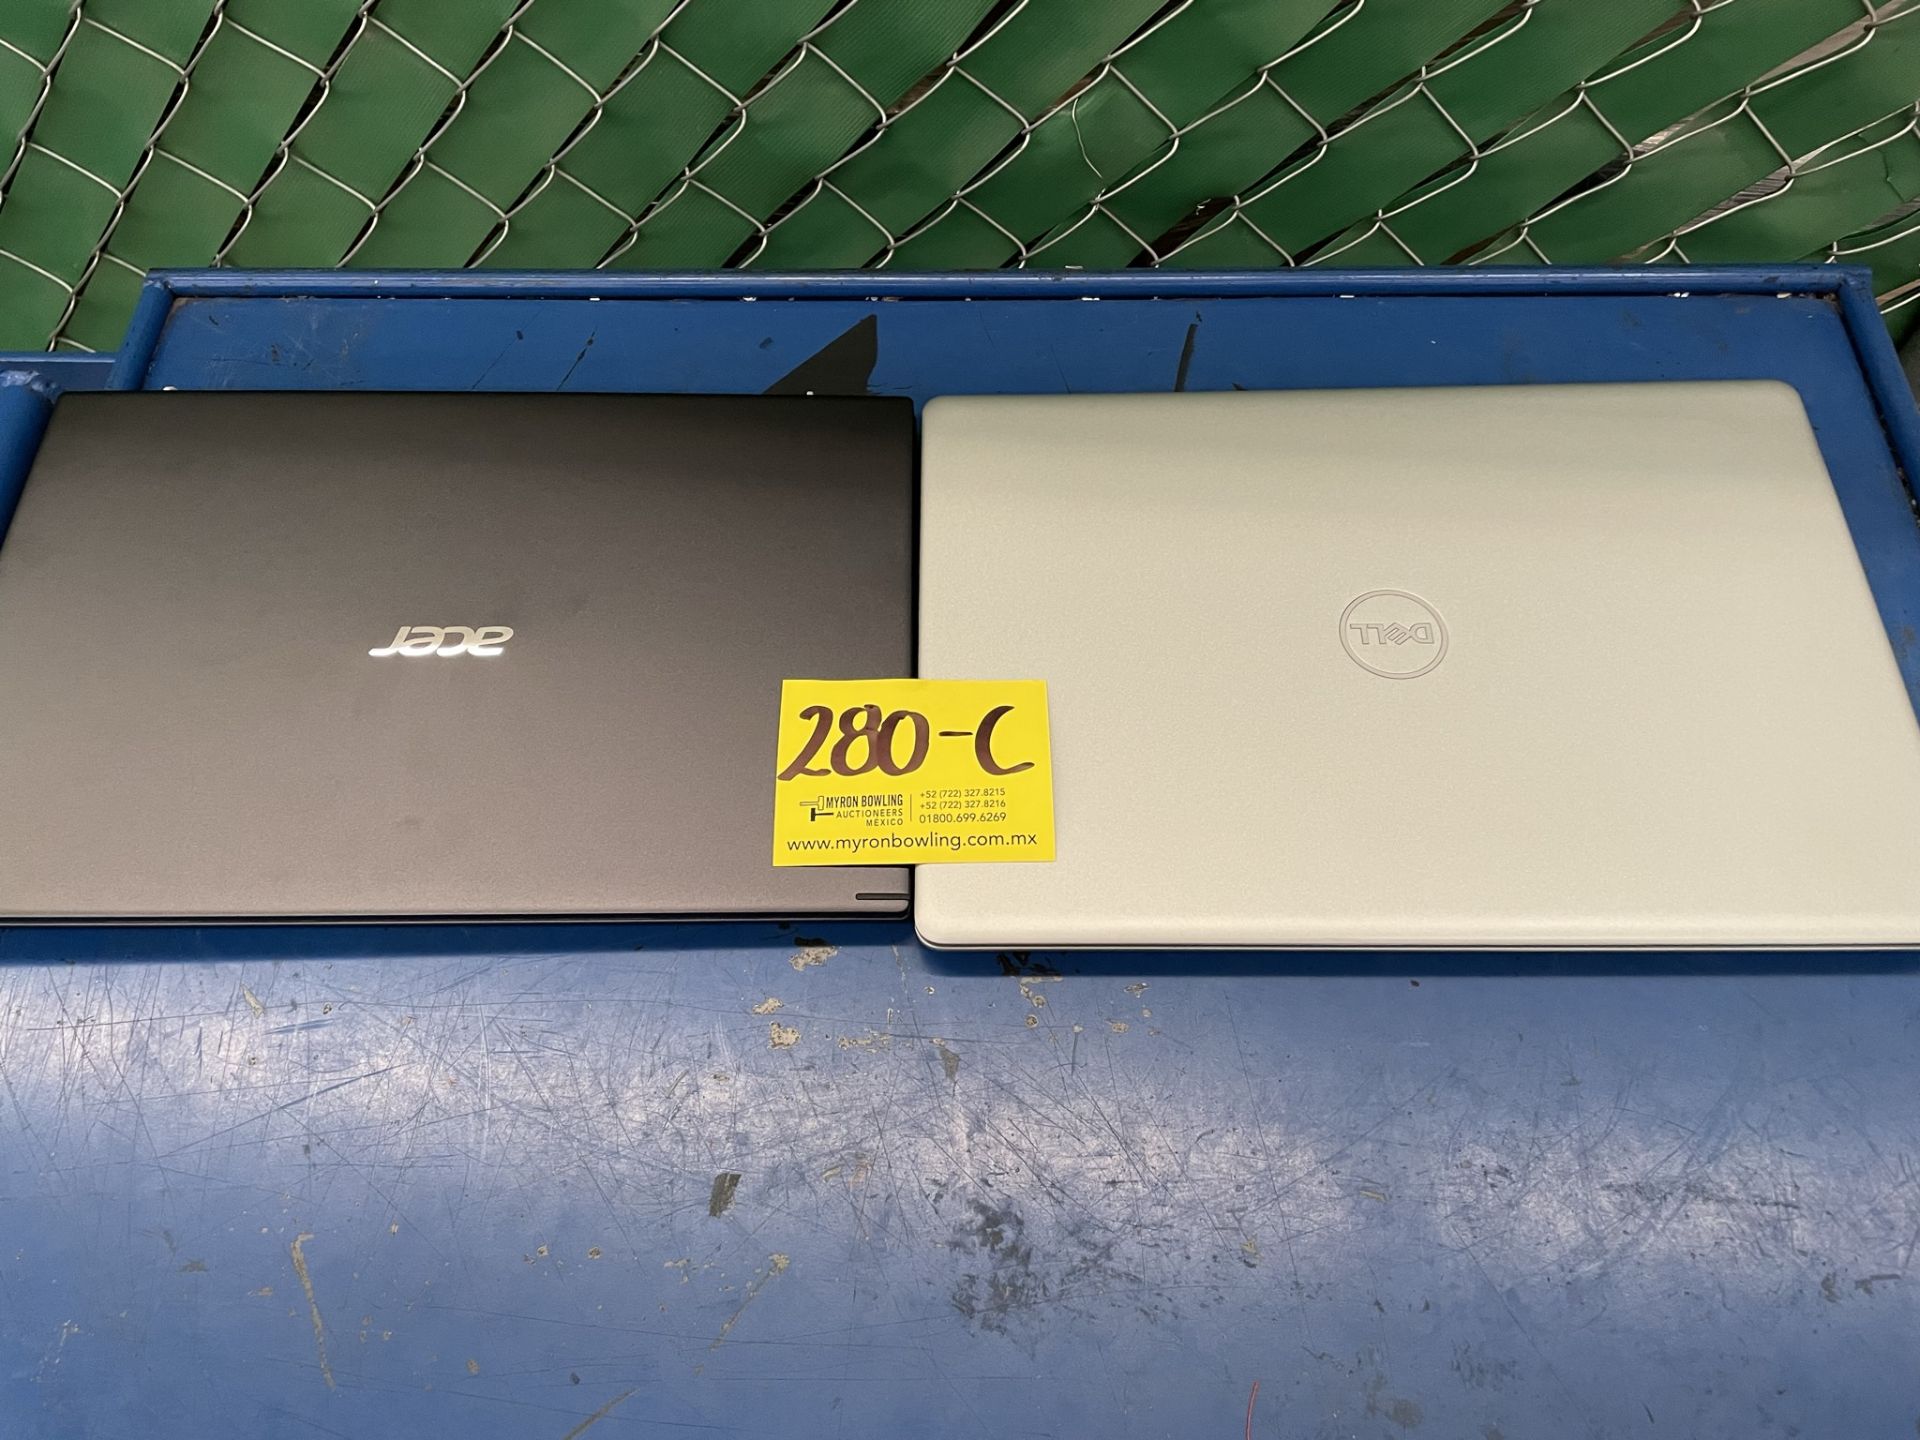 (EQUIPO NUEVO) Lote De 2 Laptops Contiene: 1 Laptop Marca DELL, Modelo I3505, Serie N/D, SO WINDOWS - Image 4 of 9